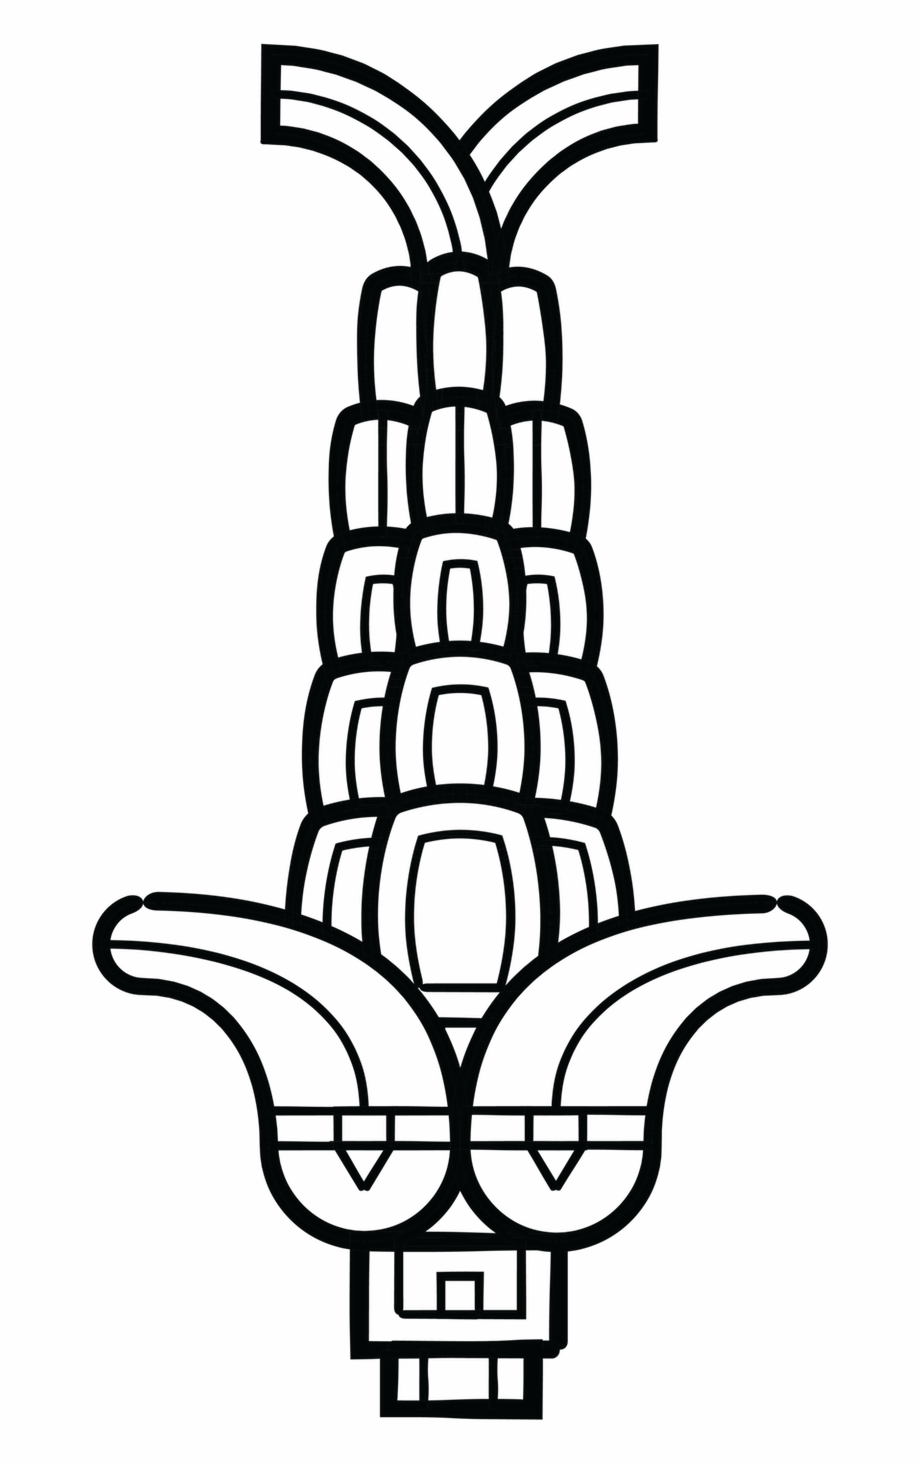 aztec corn symbol
